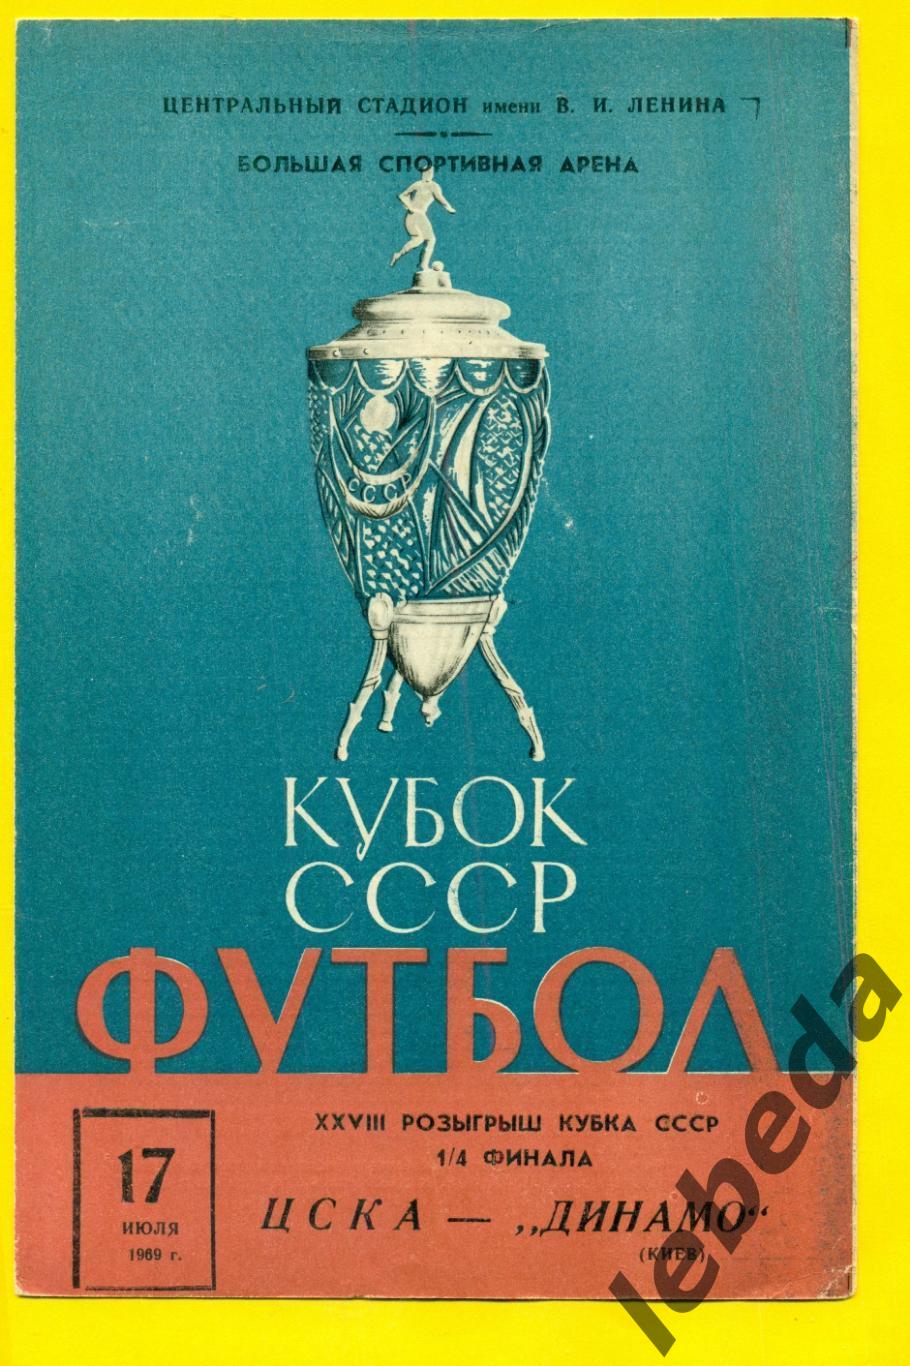 ЦСКА - Динамо Киев -1969 г. Кубок СССР - 1/4